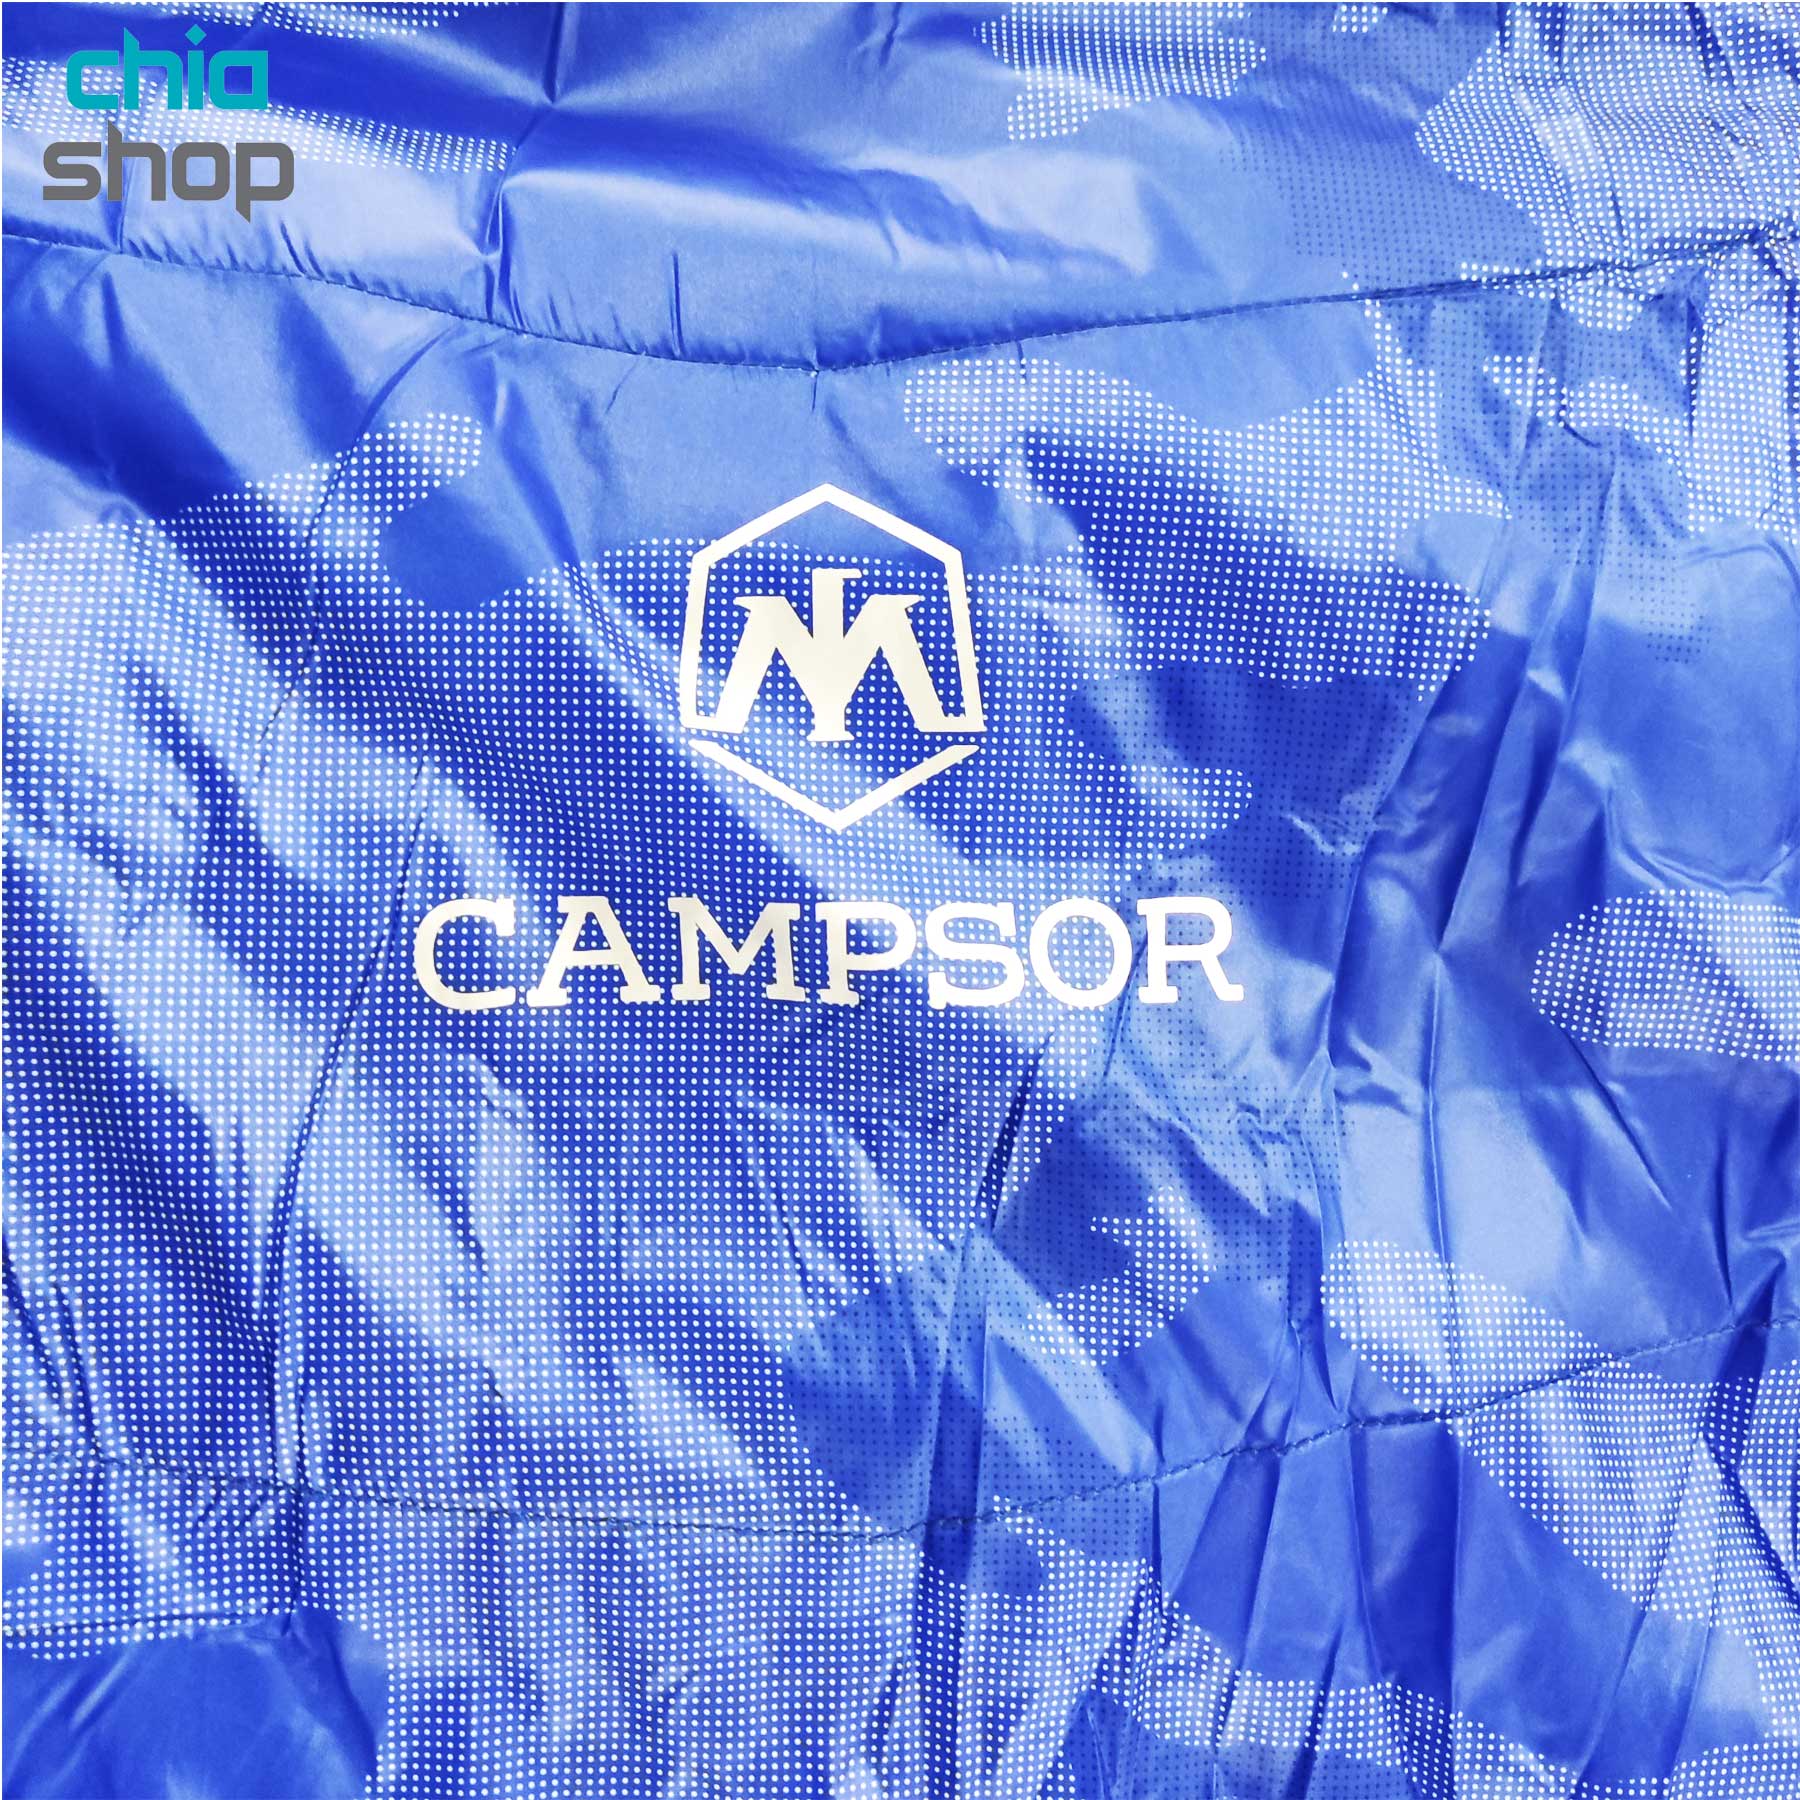 کیسه خواب کوهنوردی کمپسور مدل CAMPSOR 1500